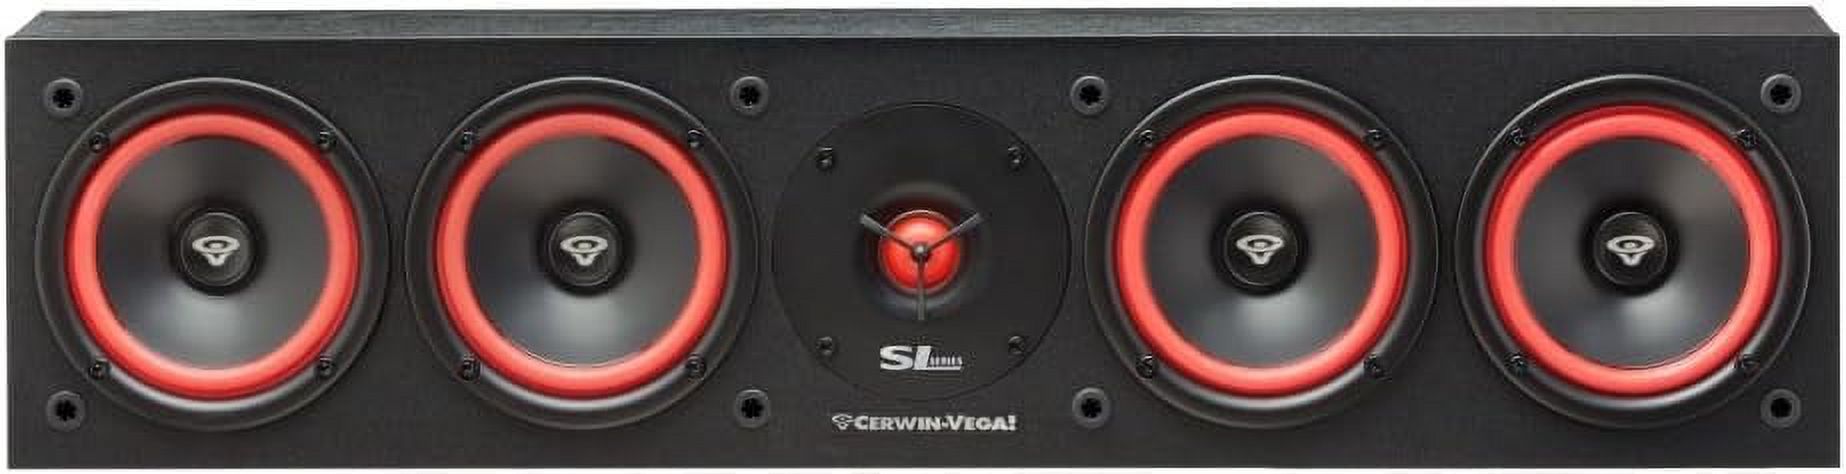 Cerwin-Vega SL-45C Quad 5 1/4 Center Channel Speaker - image 4 of 5